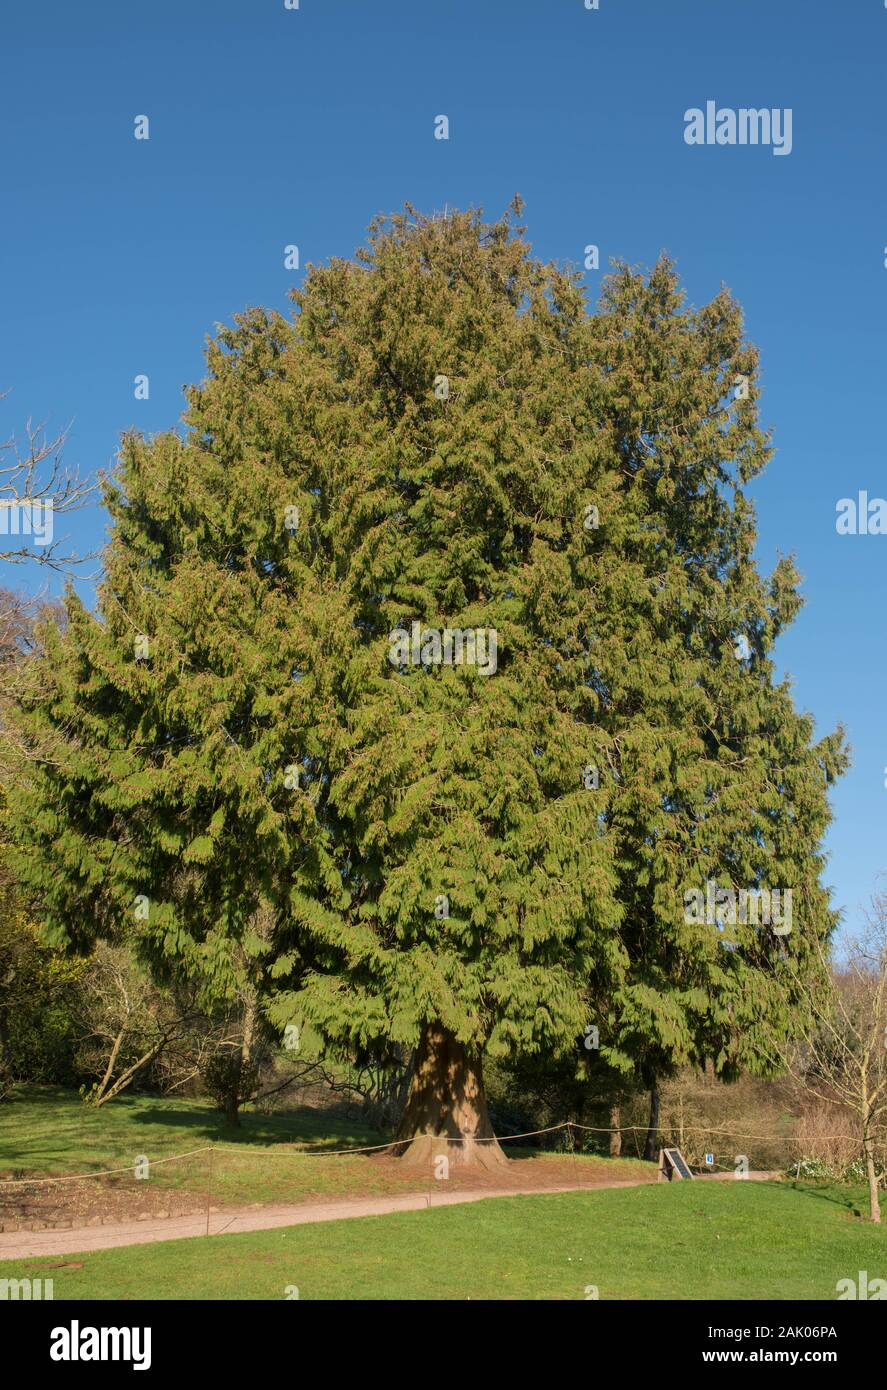 Green Foliage of an Evergreen Coniferous Western Red Cedar, Pacific Red Cedar, Giant Arborvitae or Giant Cedar (Thuja plicata) in a Park Stock Photo